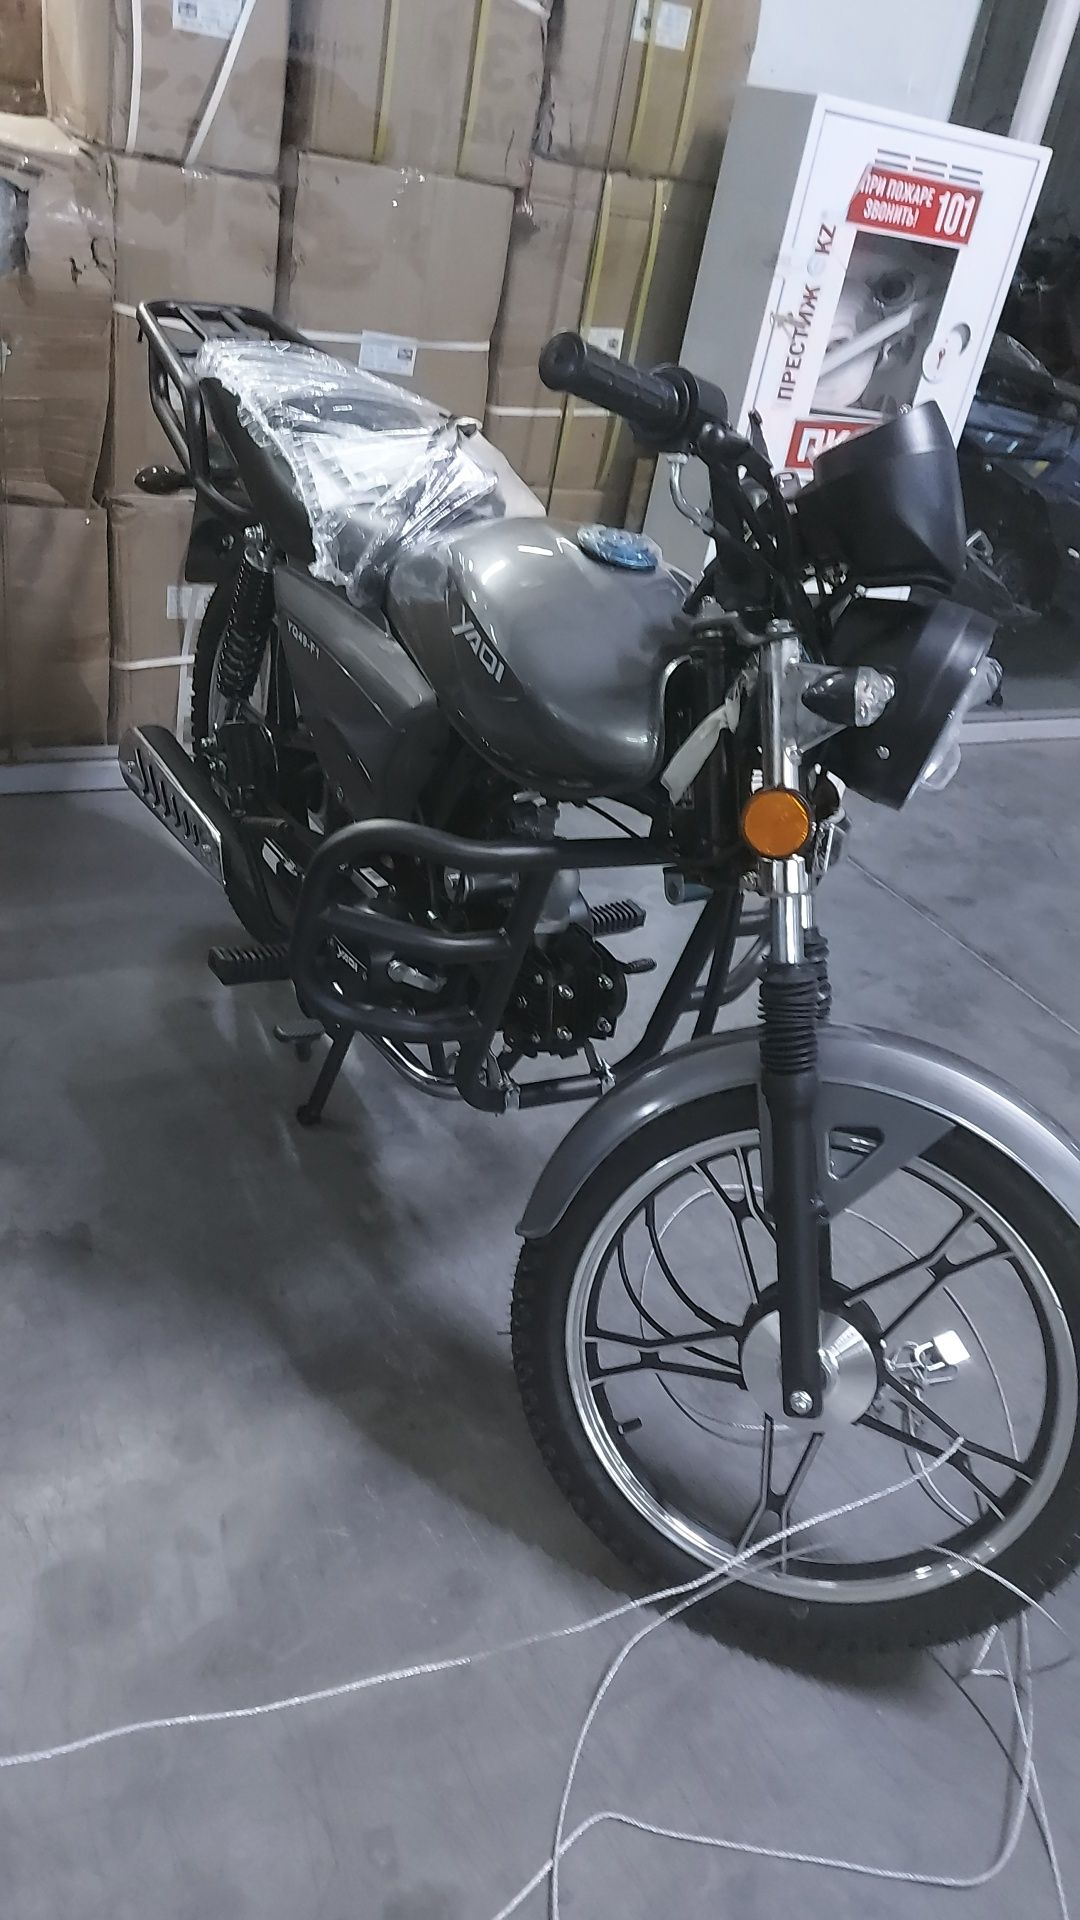 Мотоцикл 110 куб yaqi ,мопед, скутер